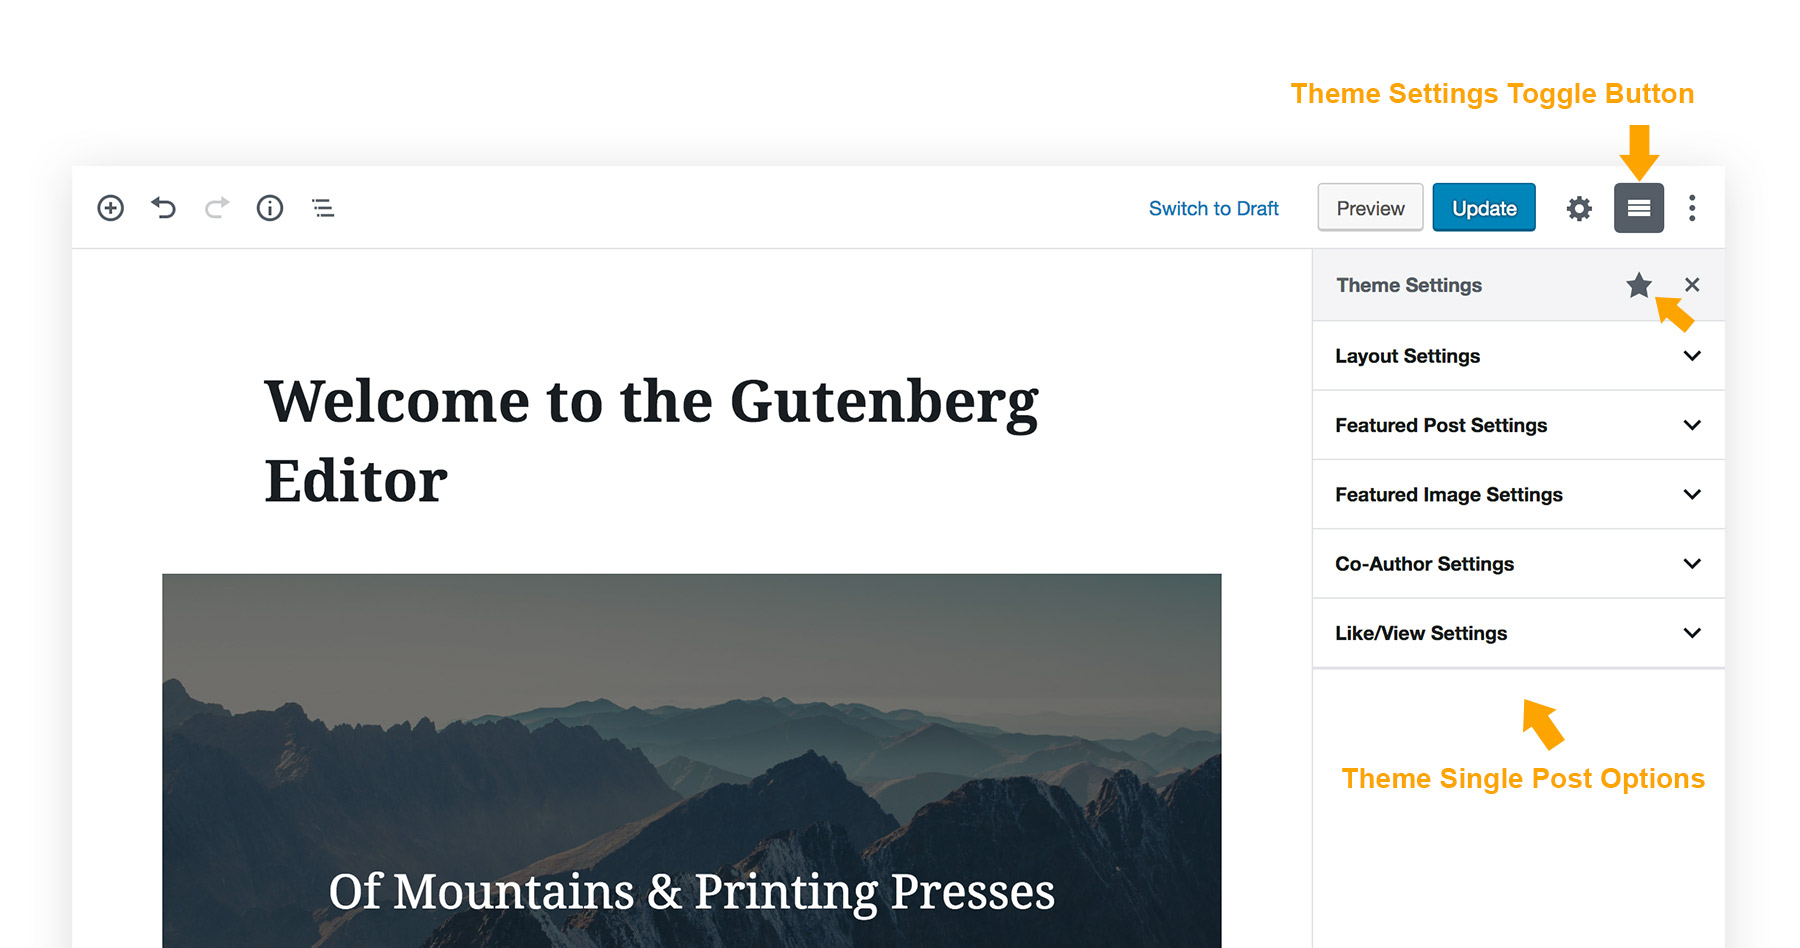 Fallsky theme Single Post Options integrated to Gutenberg Sidebar